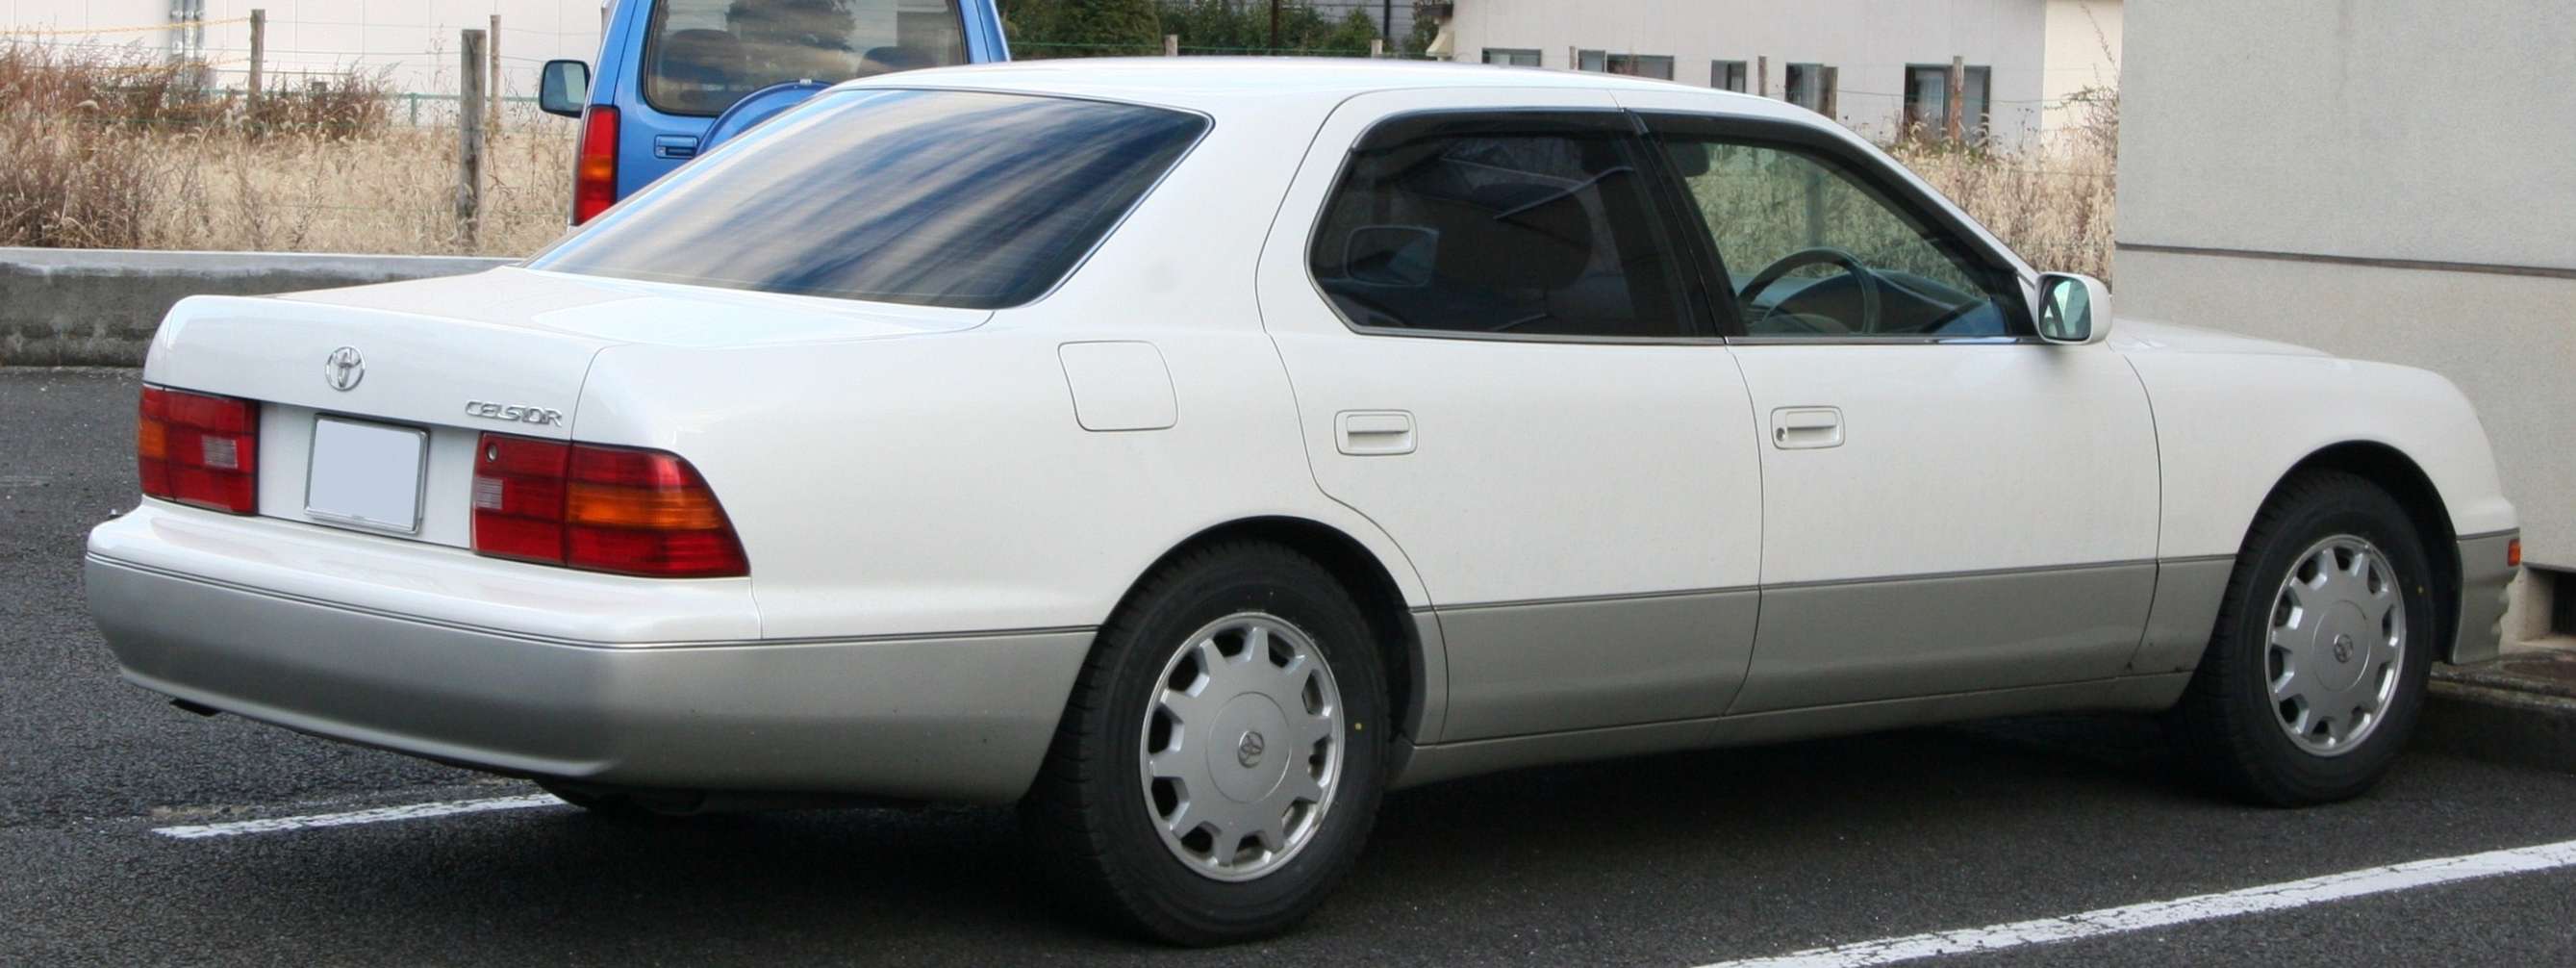 Toyota Celsior #9411338